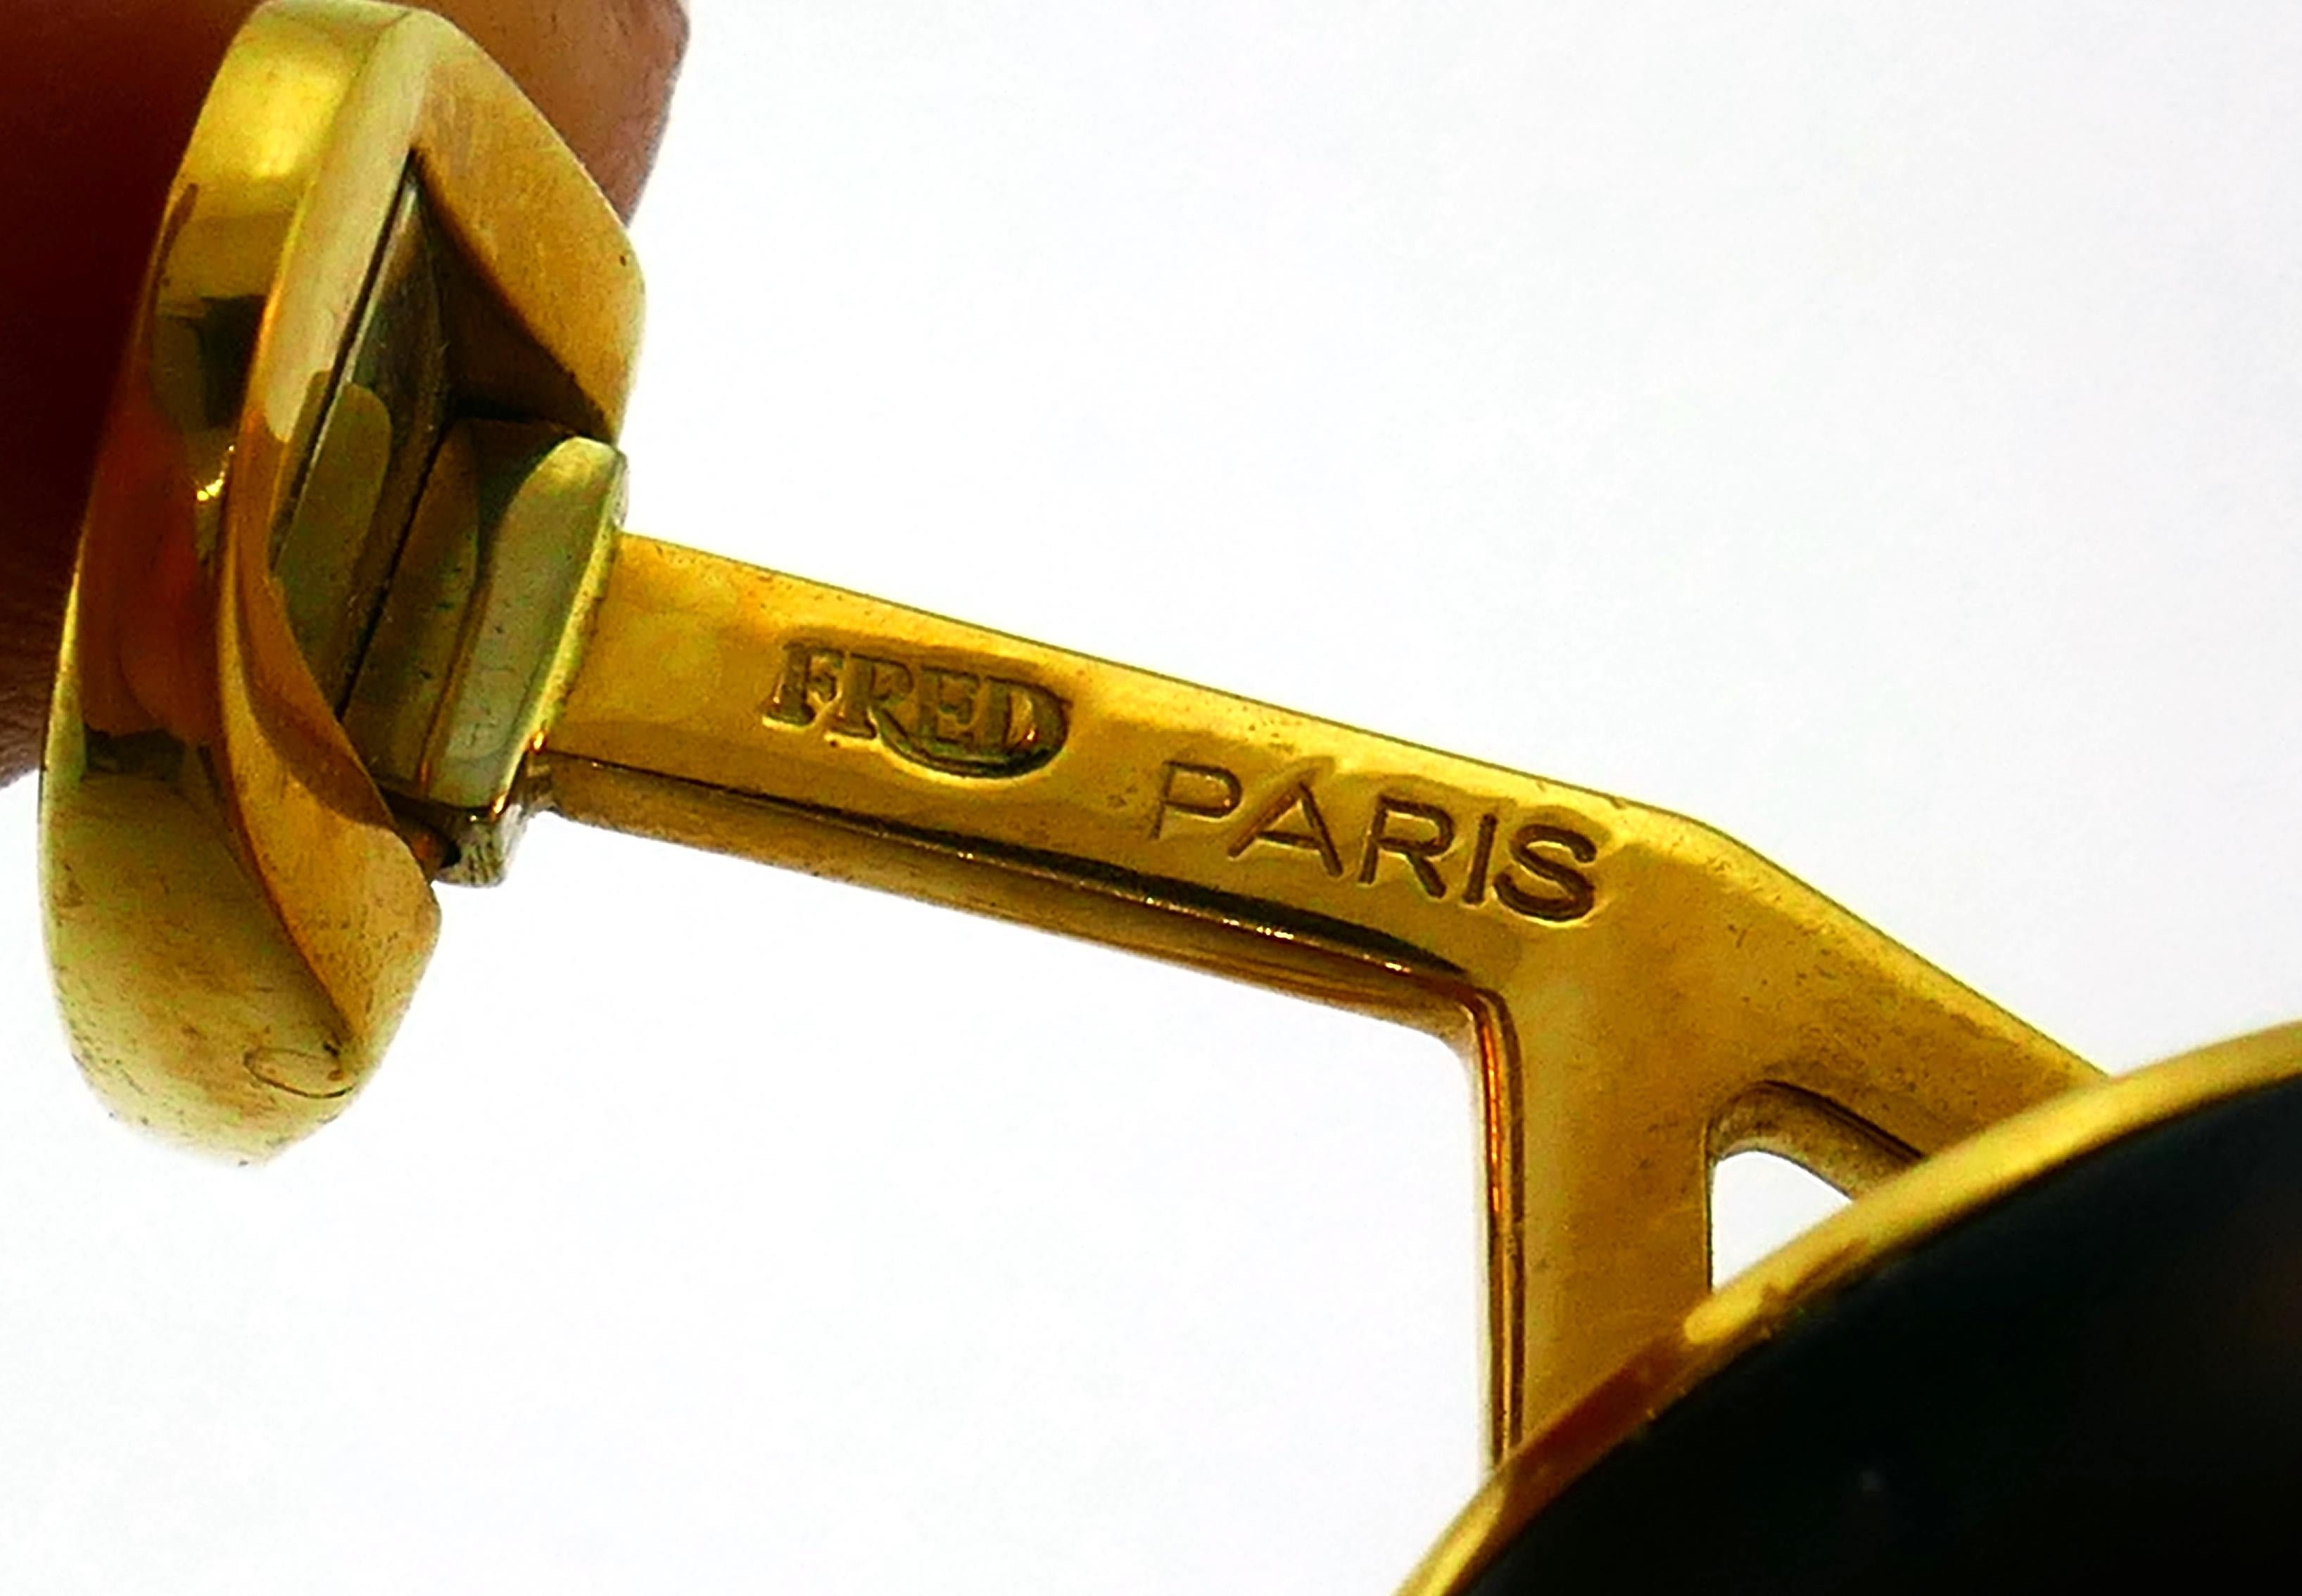 Fred Paris Yellow Gold Jet Cufflink Stud Set with Diamond 4